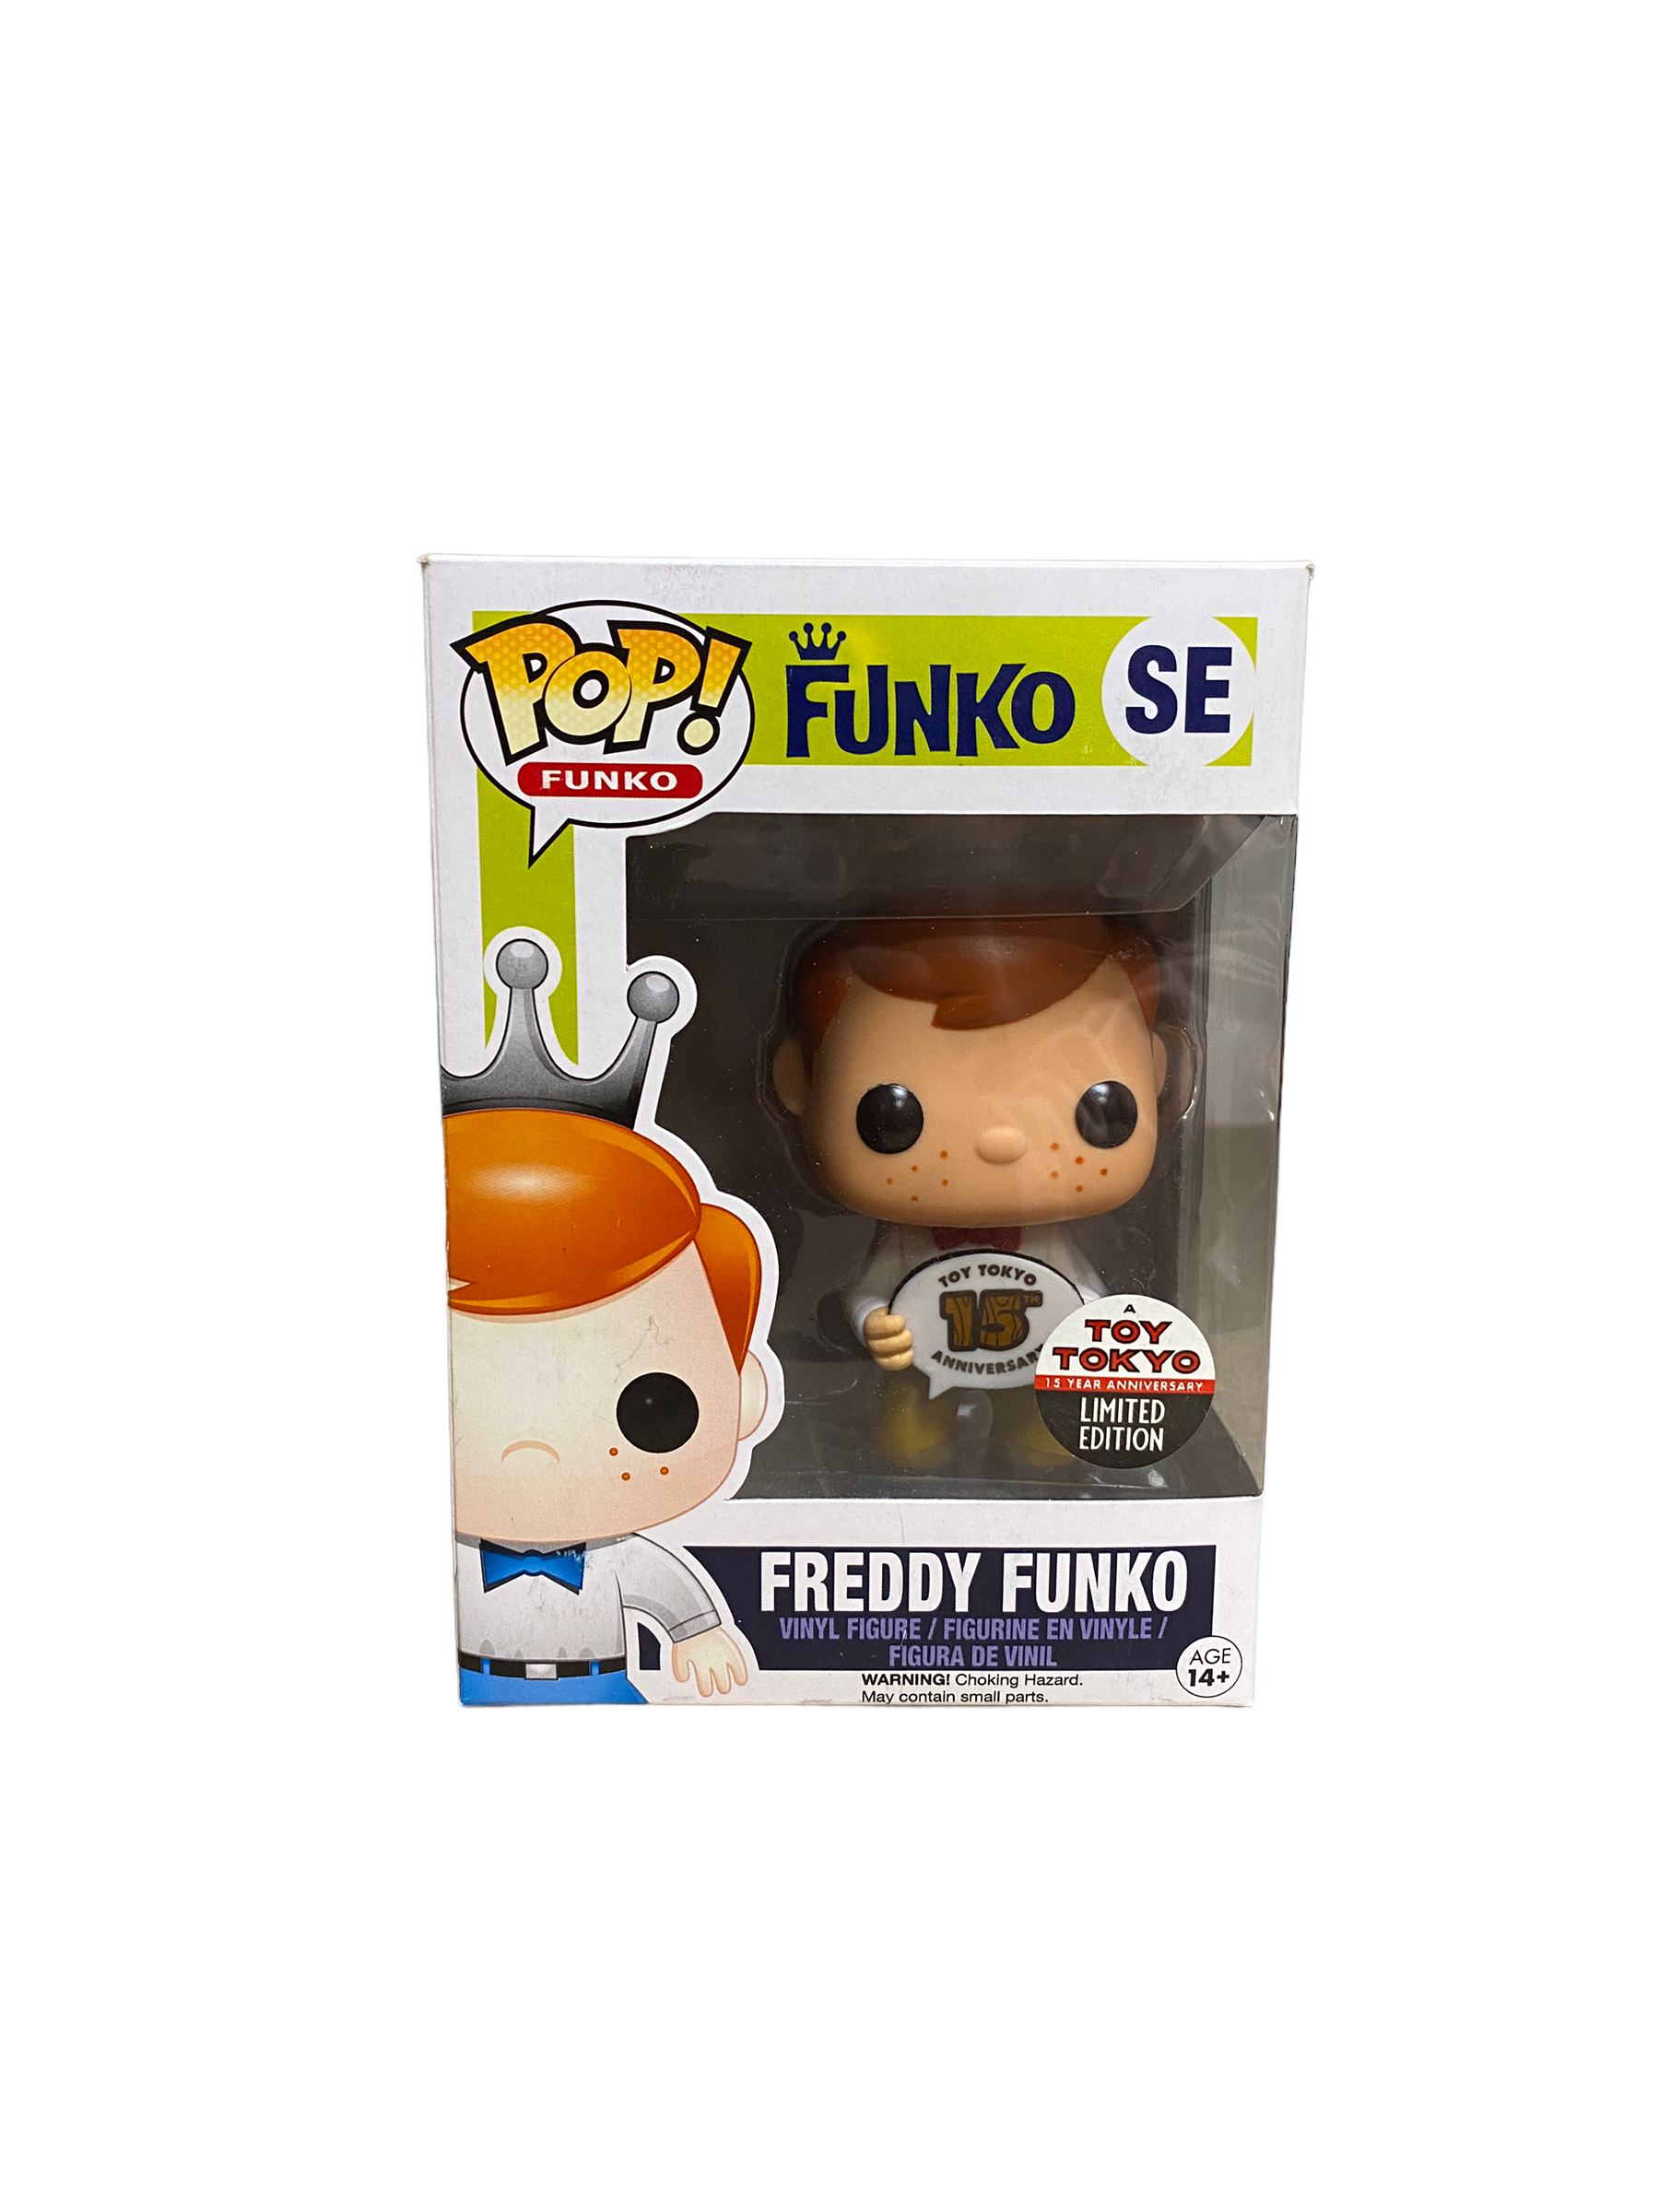 Freddy Funko Toy Tokyo 15th Anniversary Funko Pop! - Toy Tokyo Exclusive - Condition 7.5/10